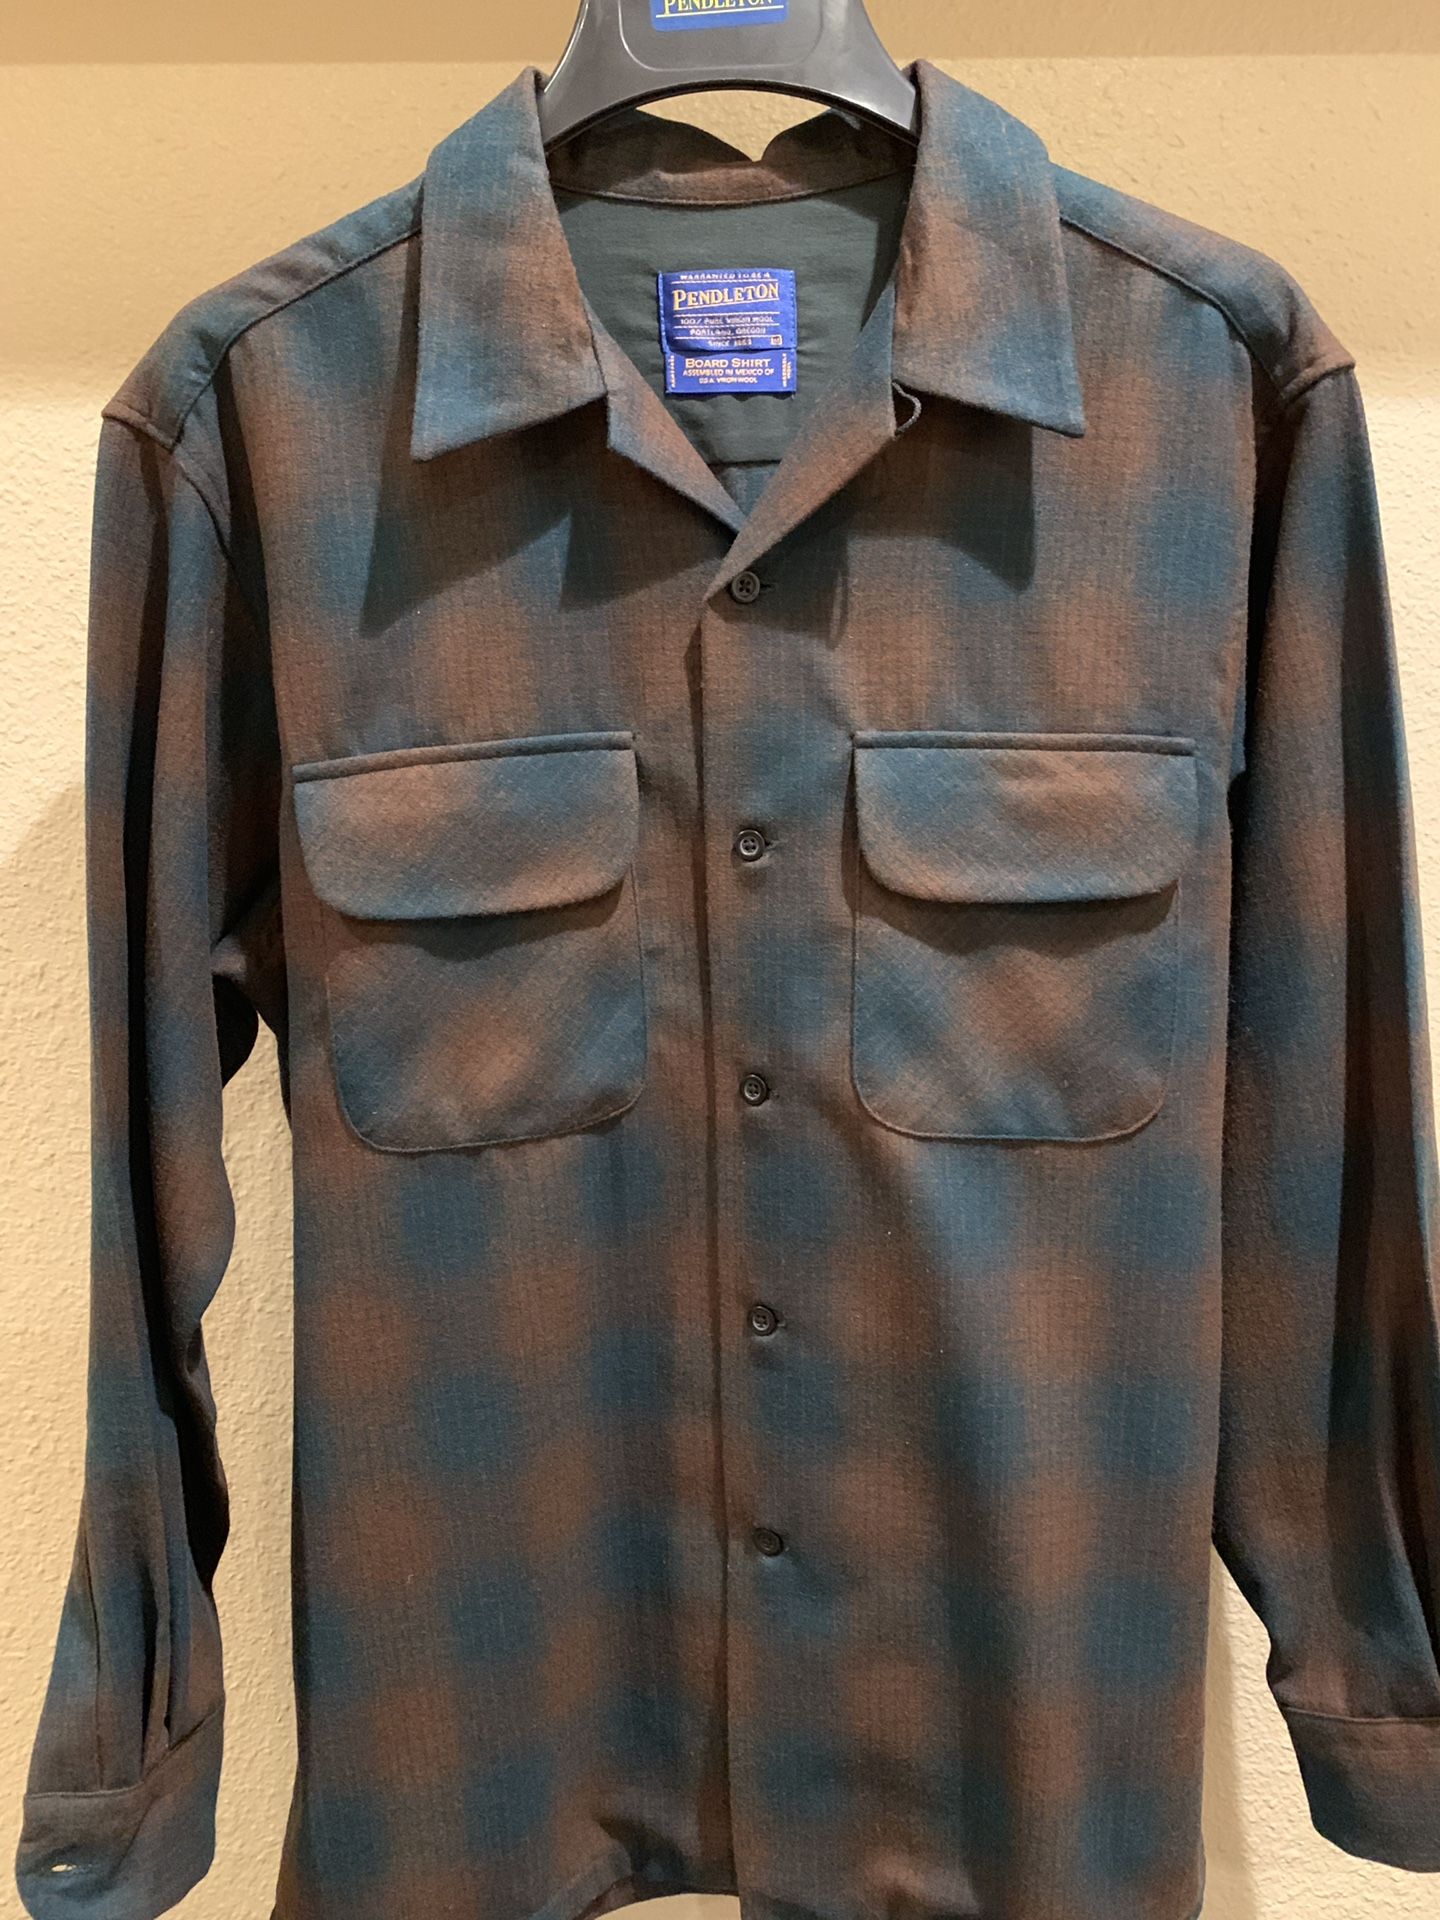 Pendleton board shirt (dark green and brown)